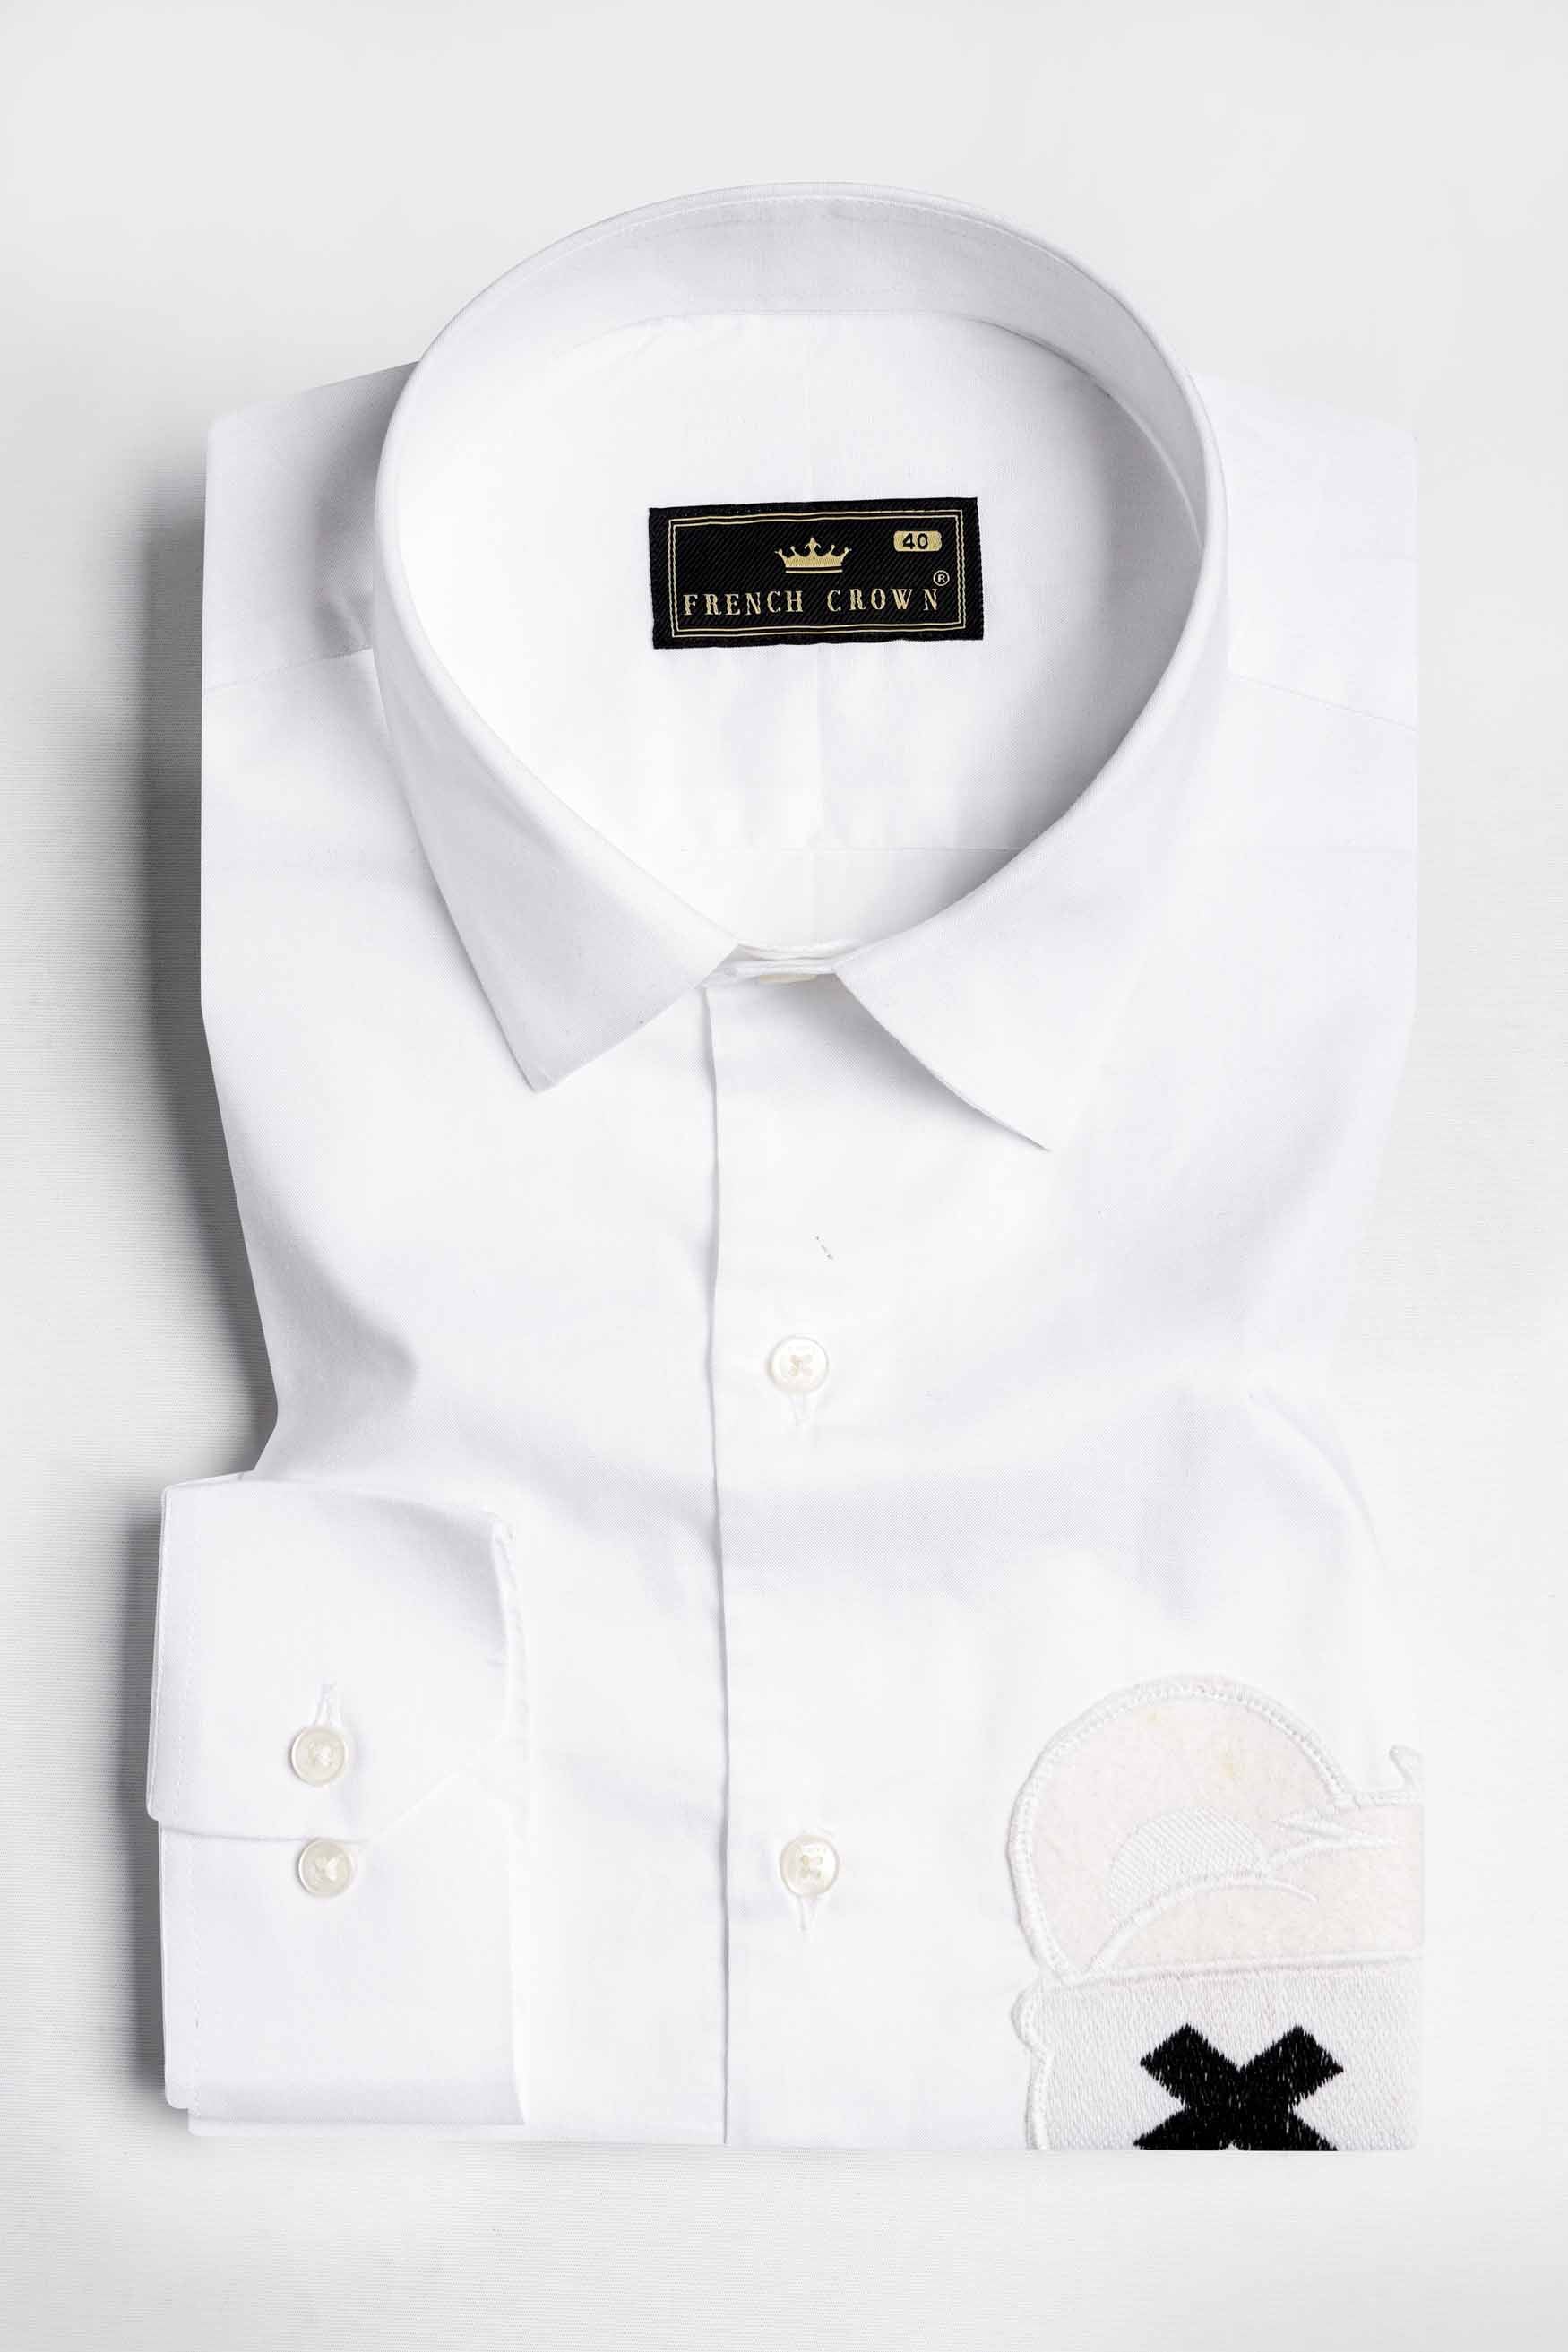 Bright White Funky Patchwork Super Soft Premium Cotton Designer Shirt